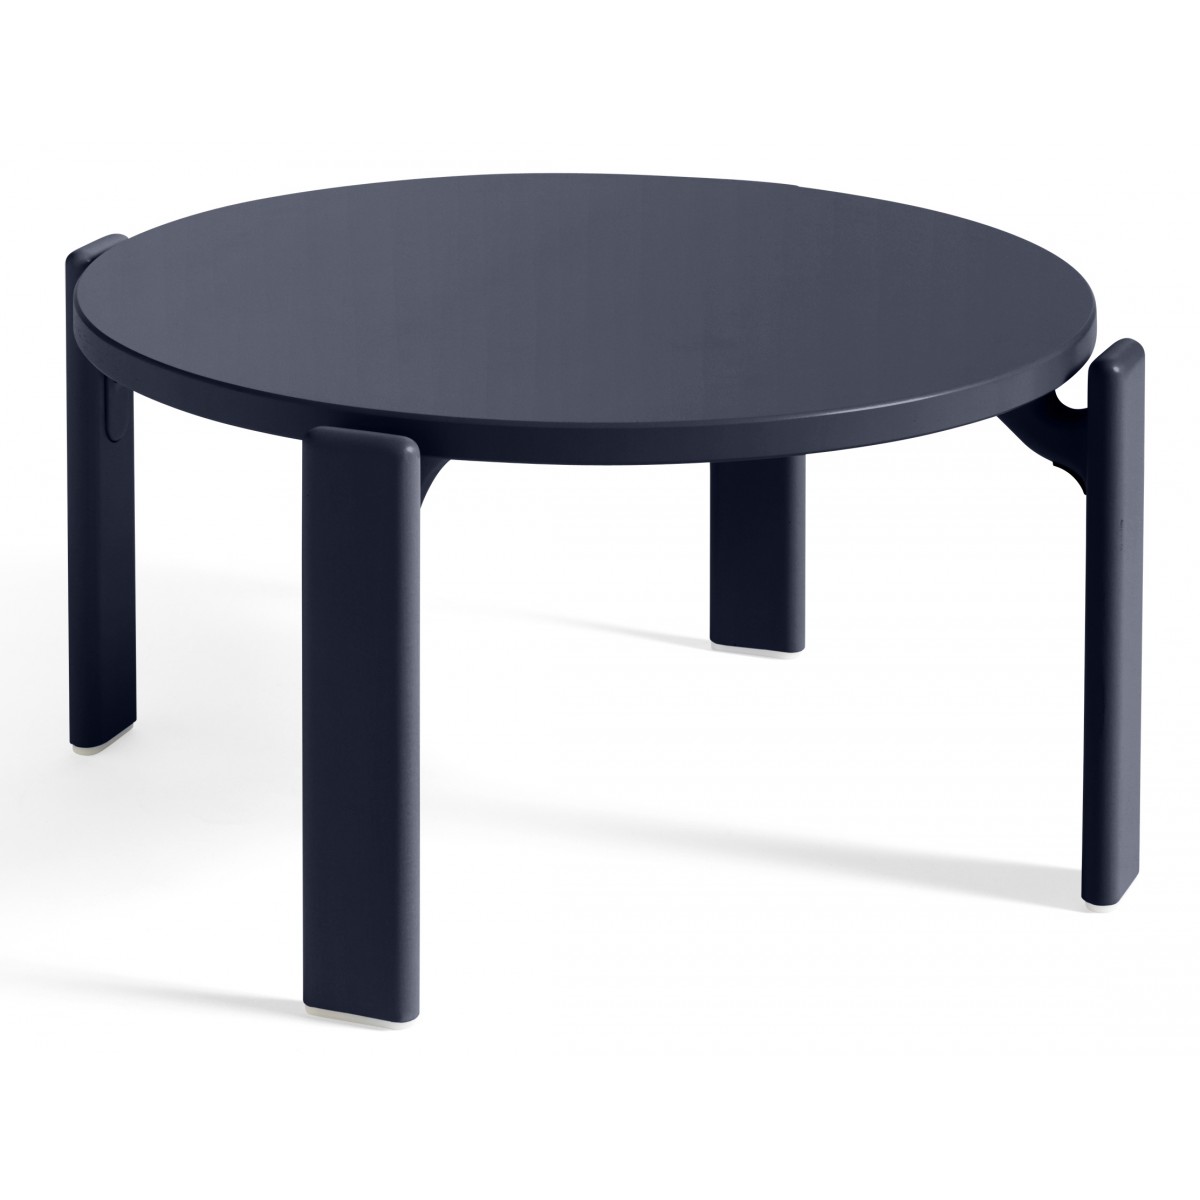 Deep blue - REY coffee table